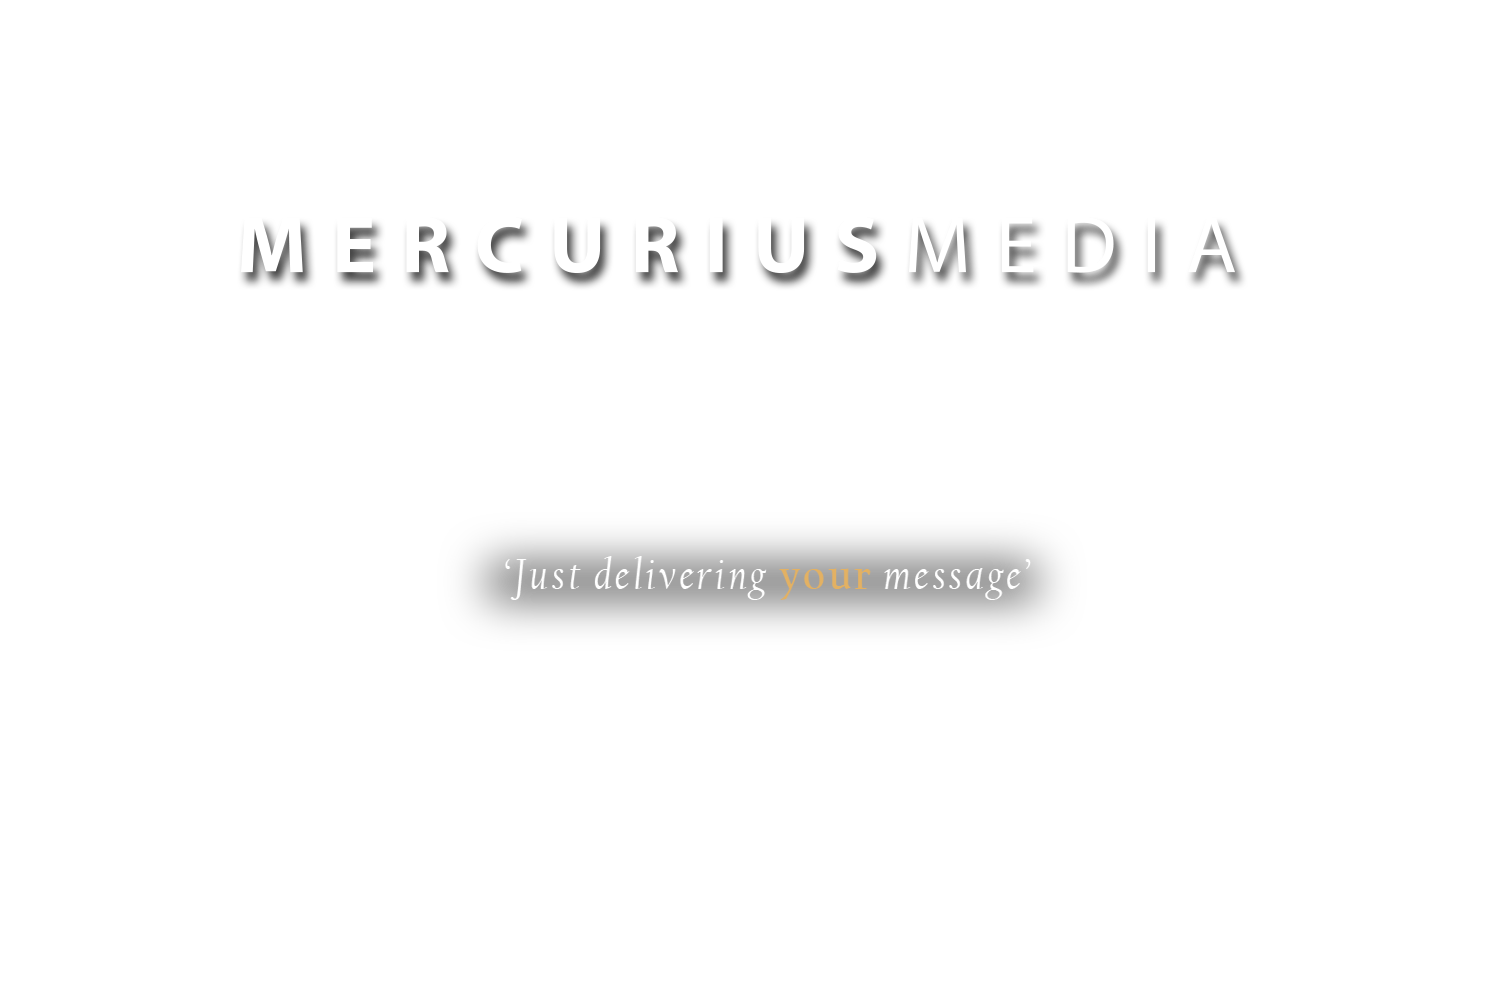 Mercurius media - Just delivering your message